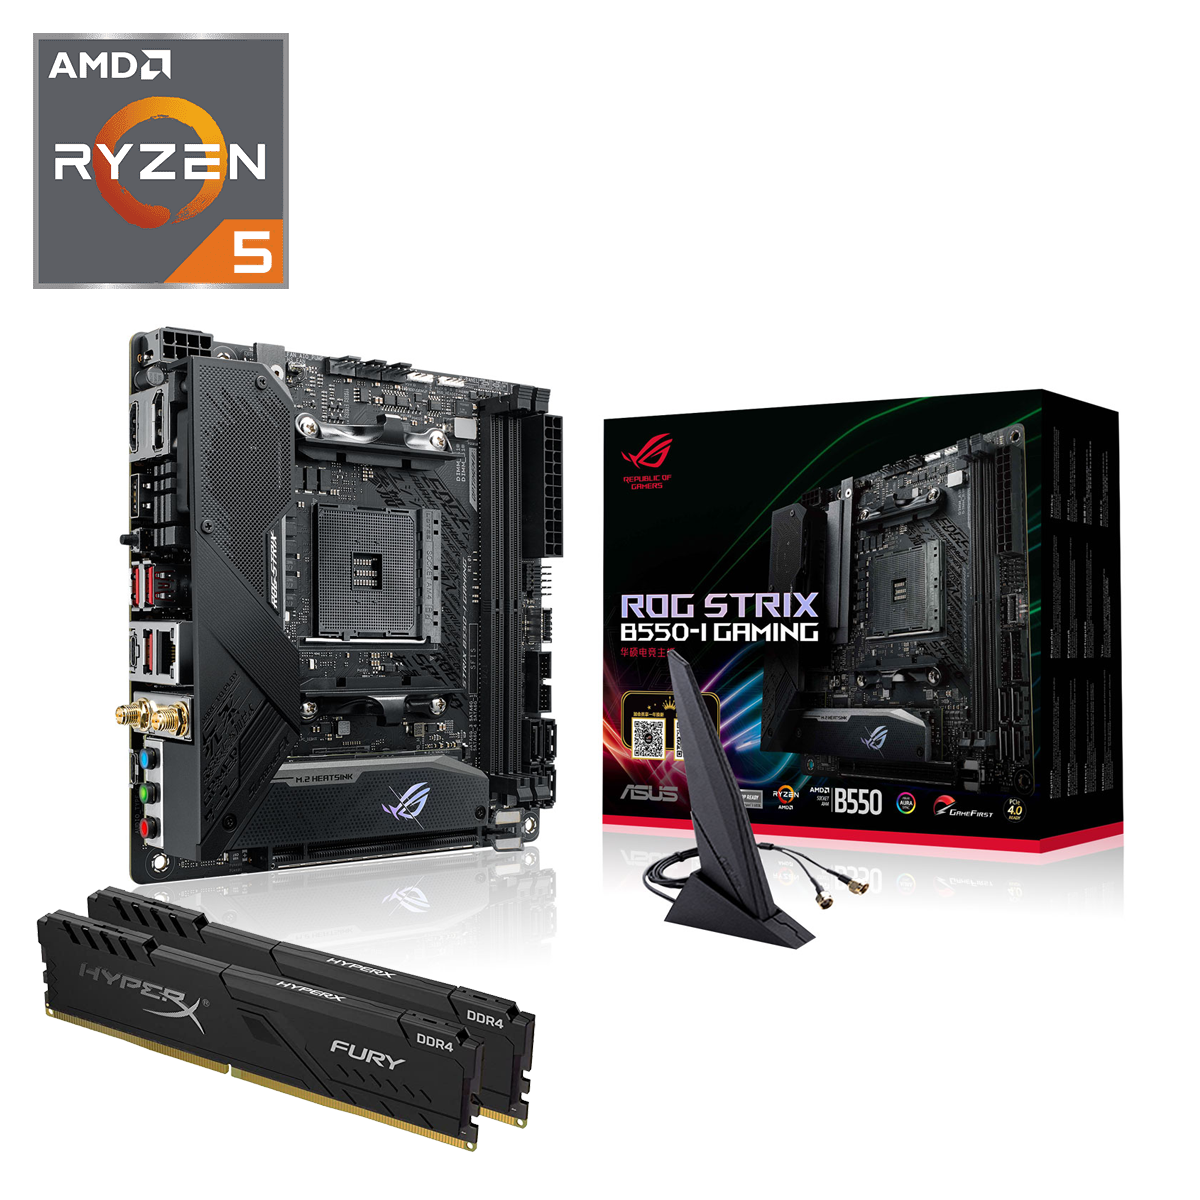 AMD - AMD Ryzen 5 5600X - Asus Strix B550-I Gaming Bundle